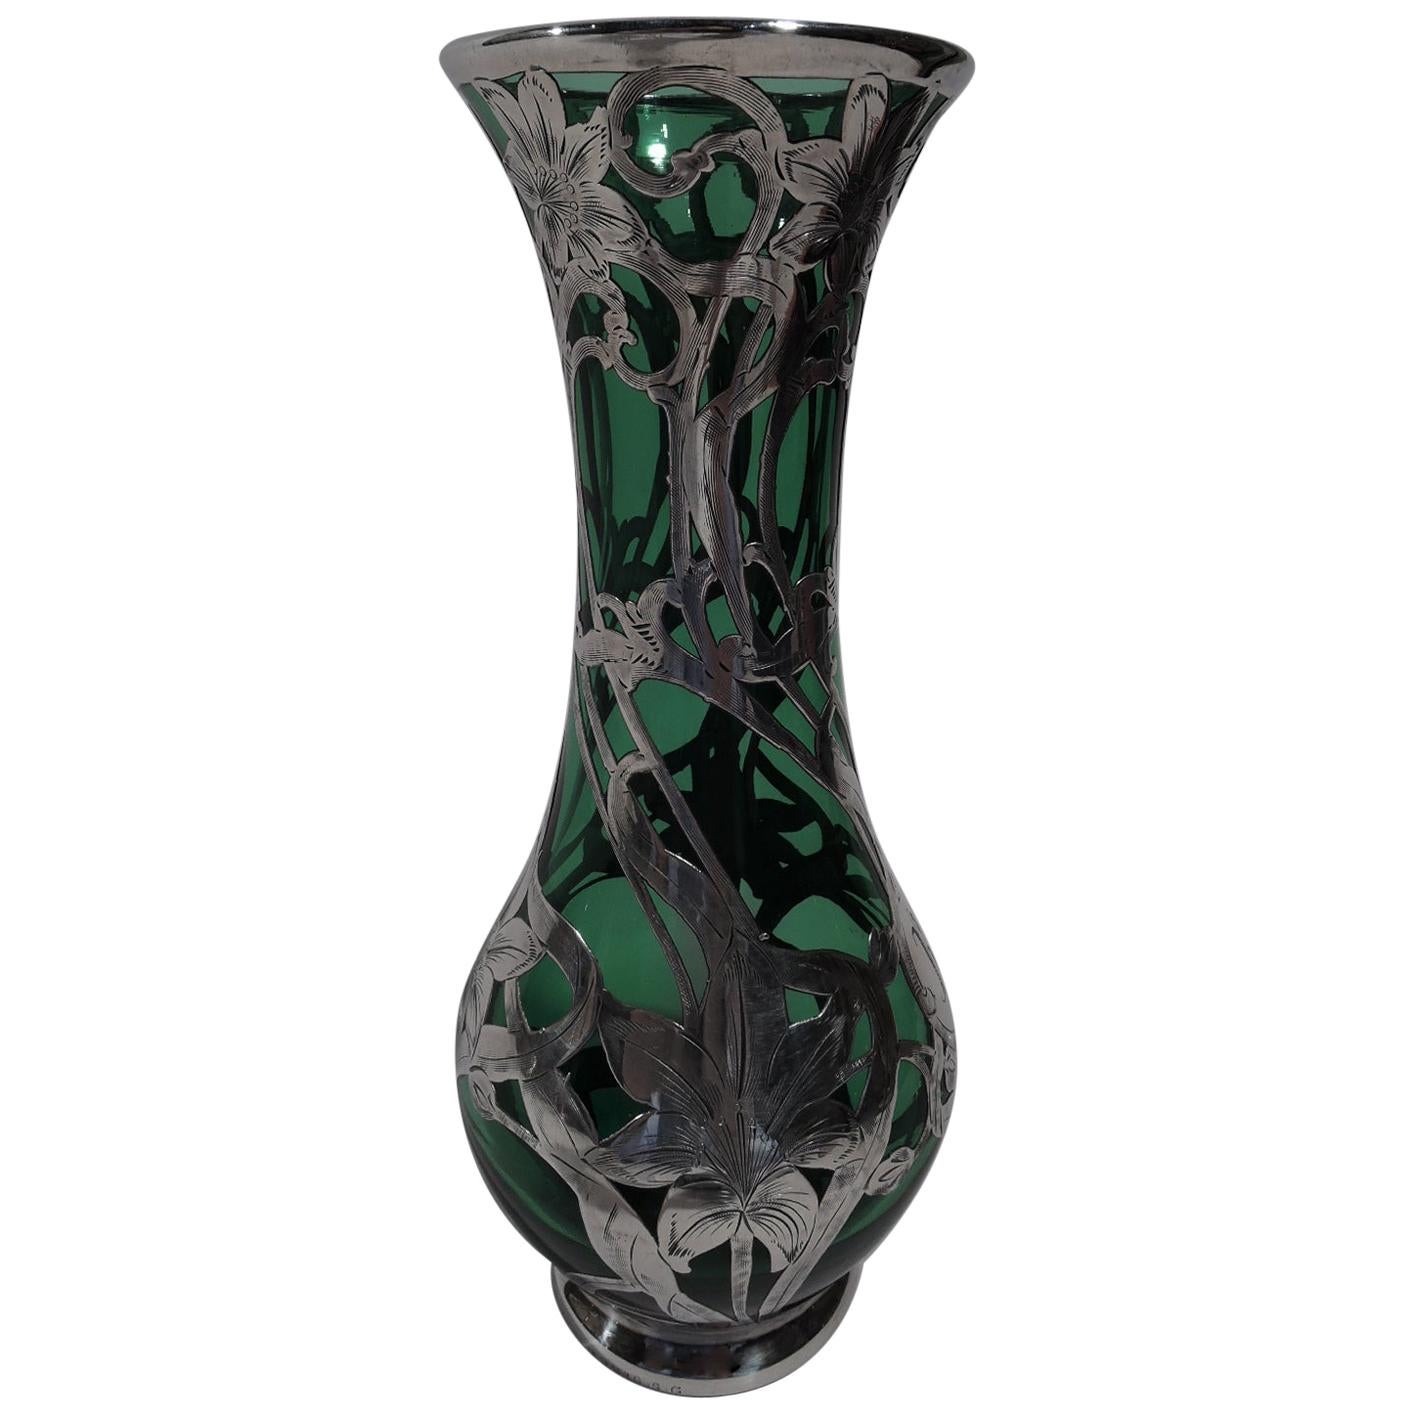 Alvin American Art Nouveau Green Glass Silver Overlay Vase